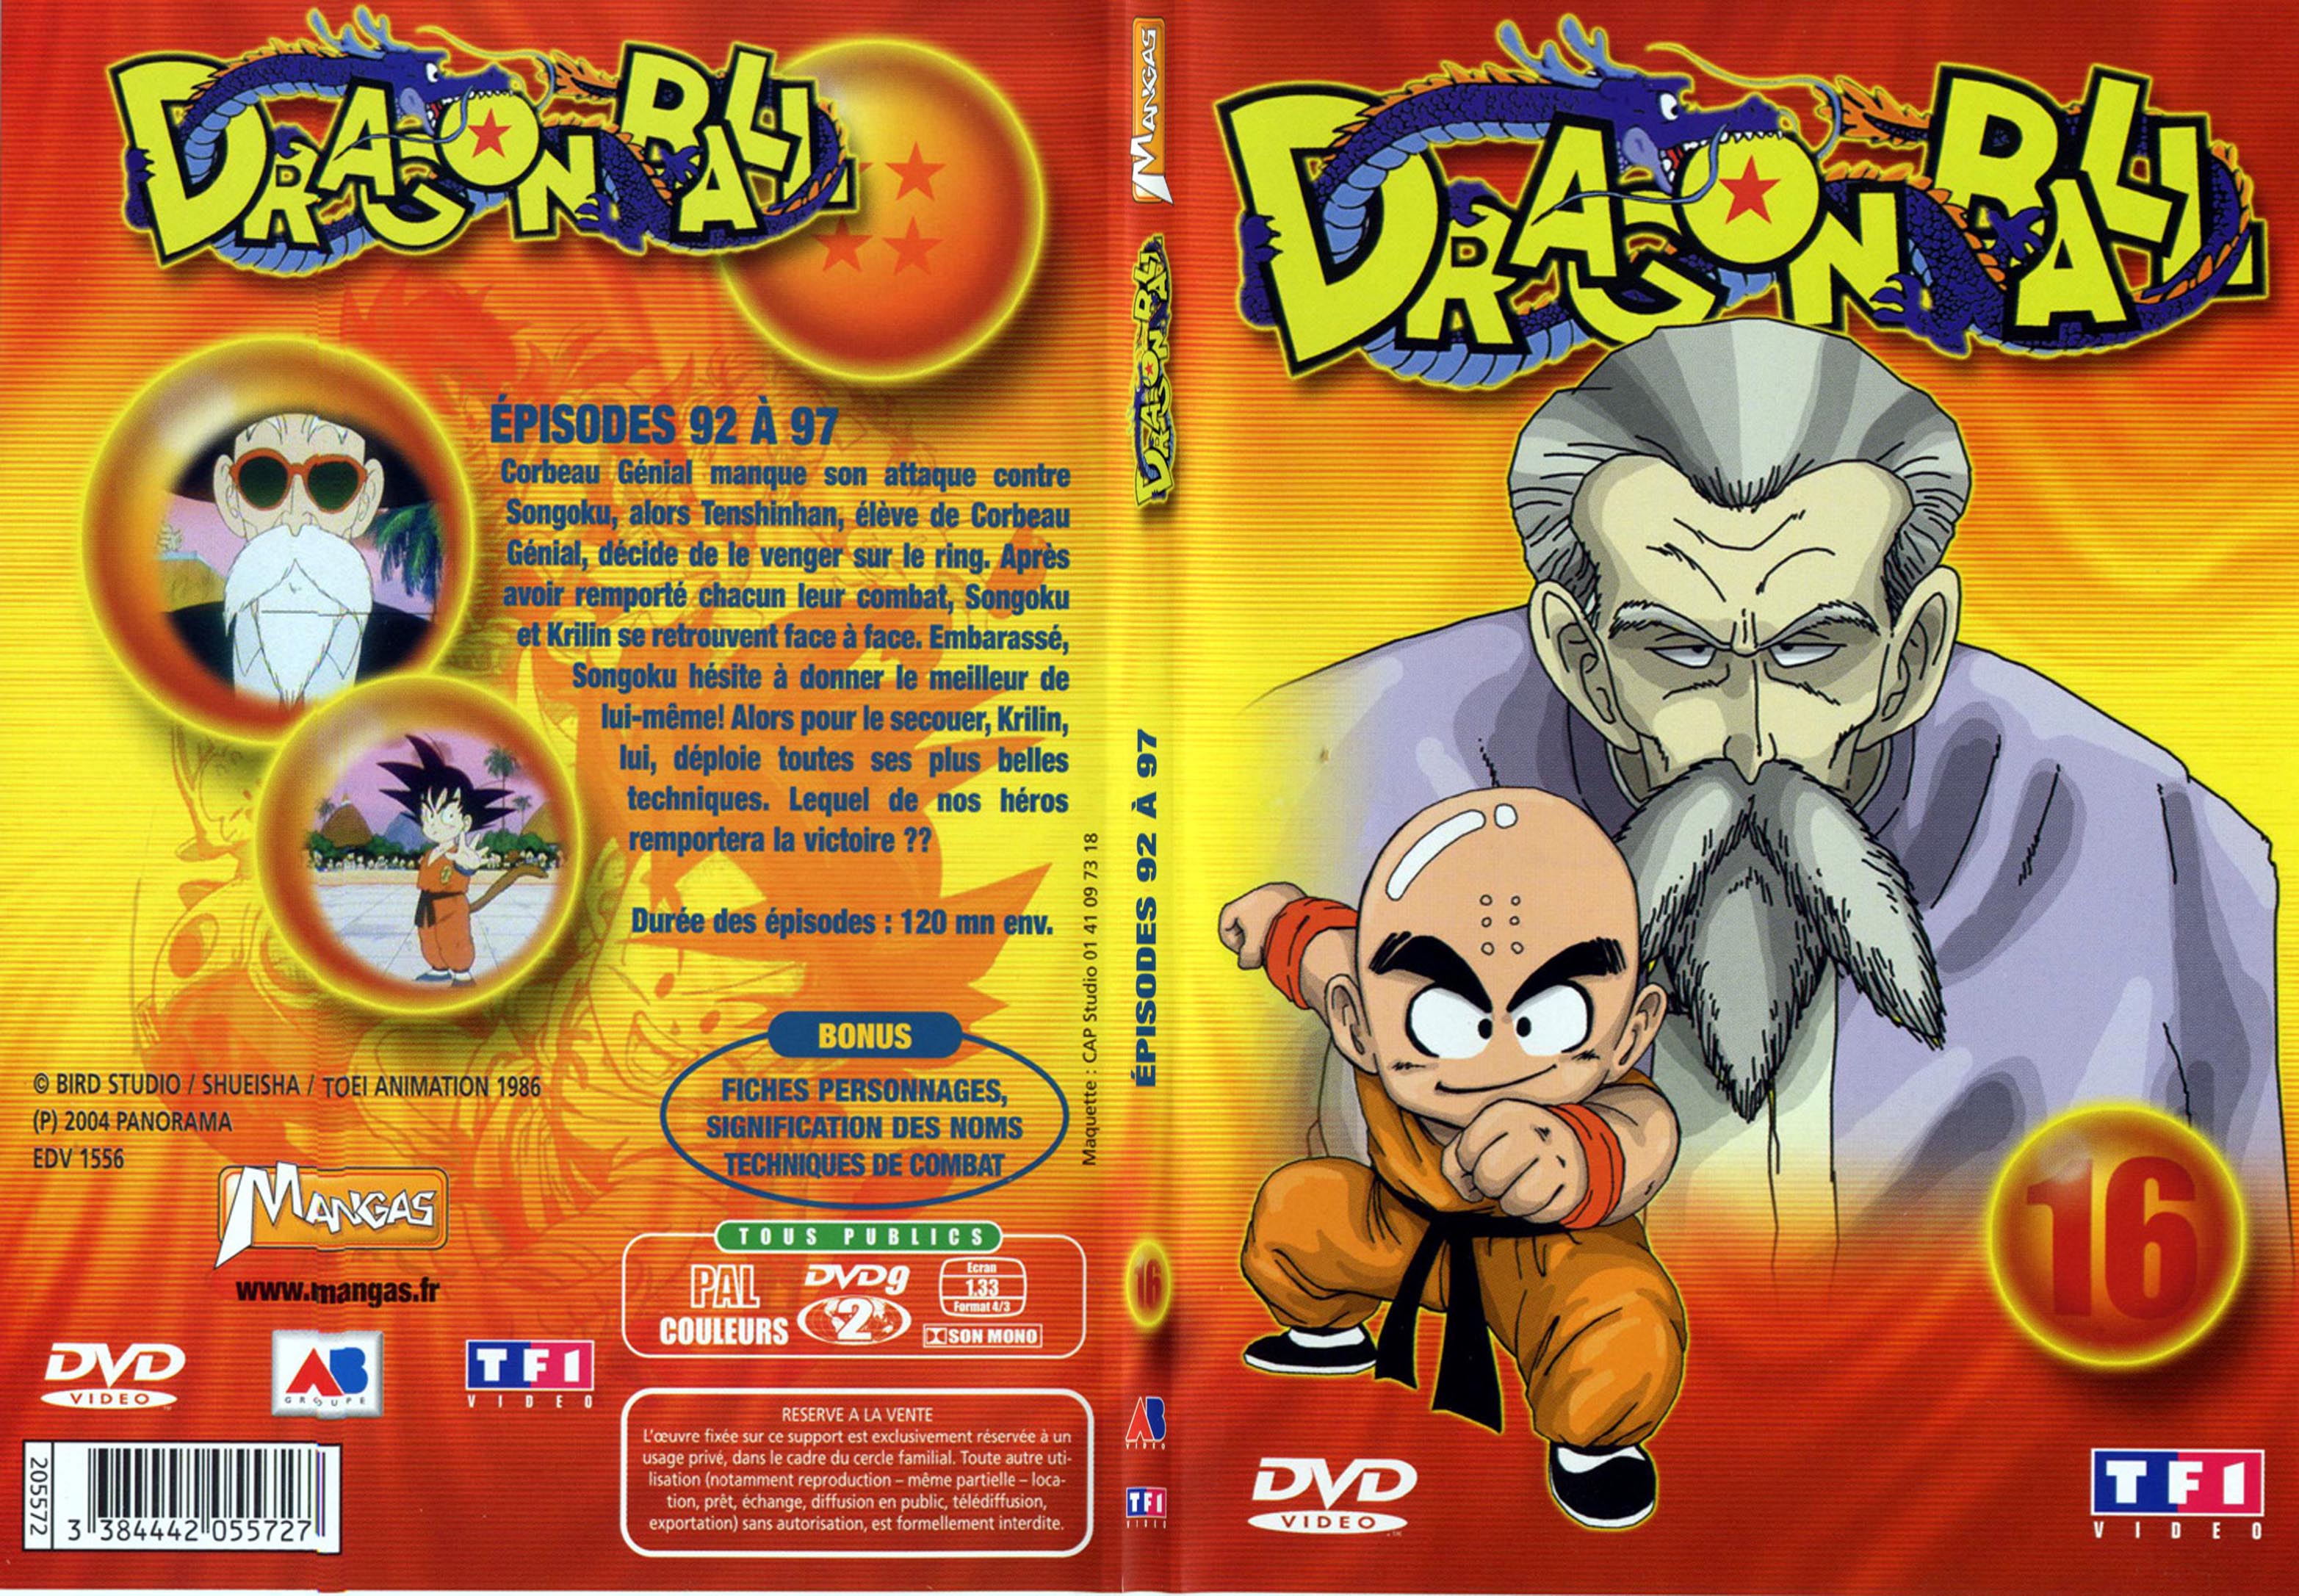 Jaquette DVD Dragon ball vol 16 - SLIM